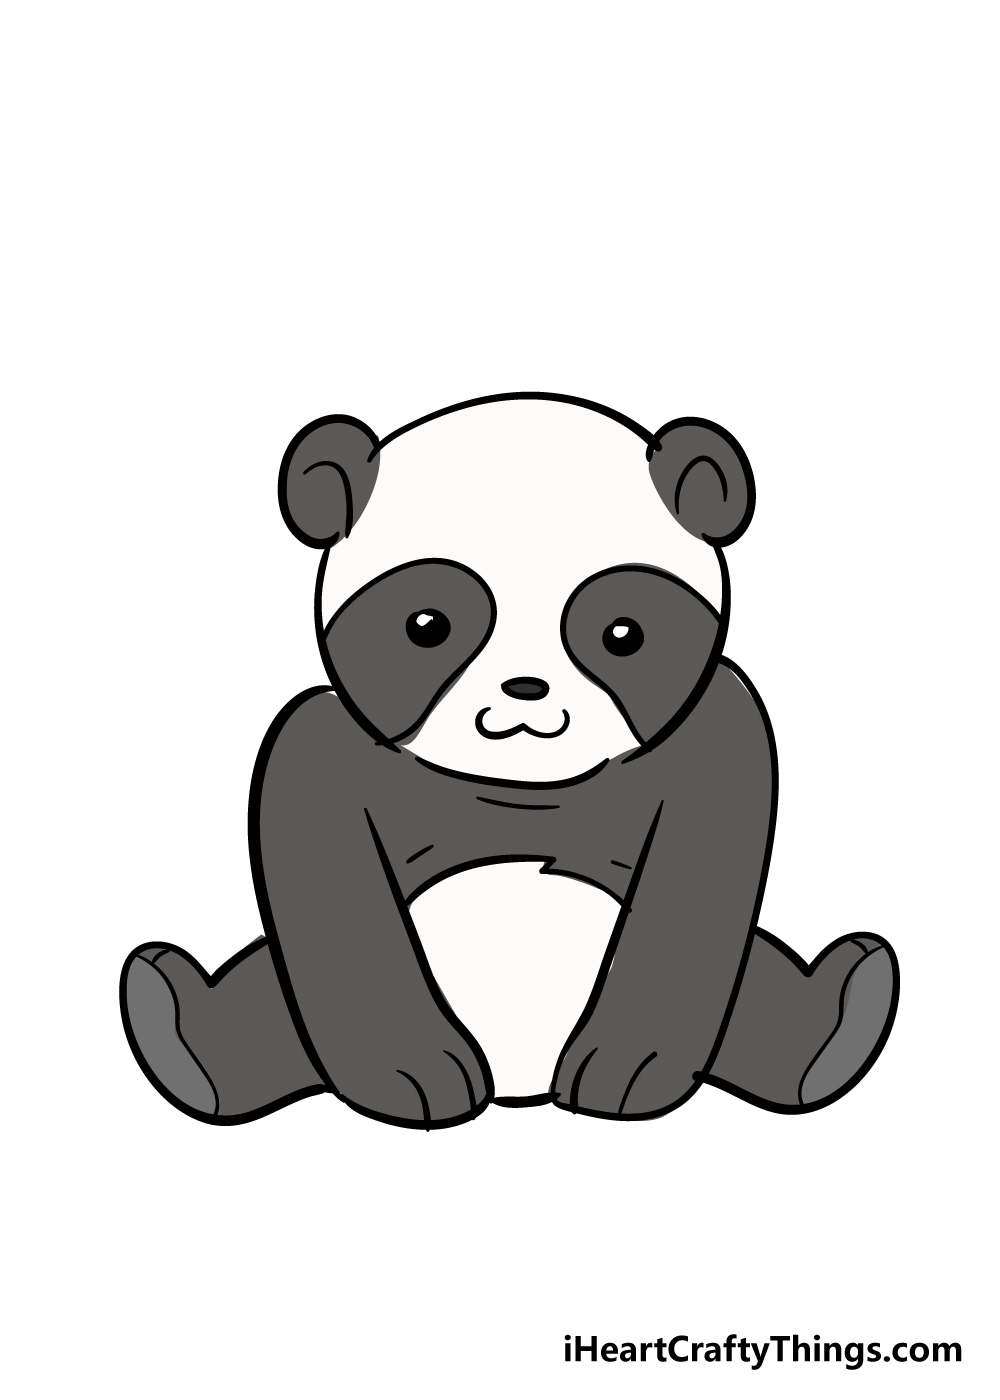 How to draw a cute panda - Easy animals to draw for kids-saigonsouth.com.vn